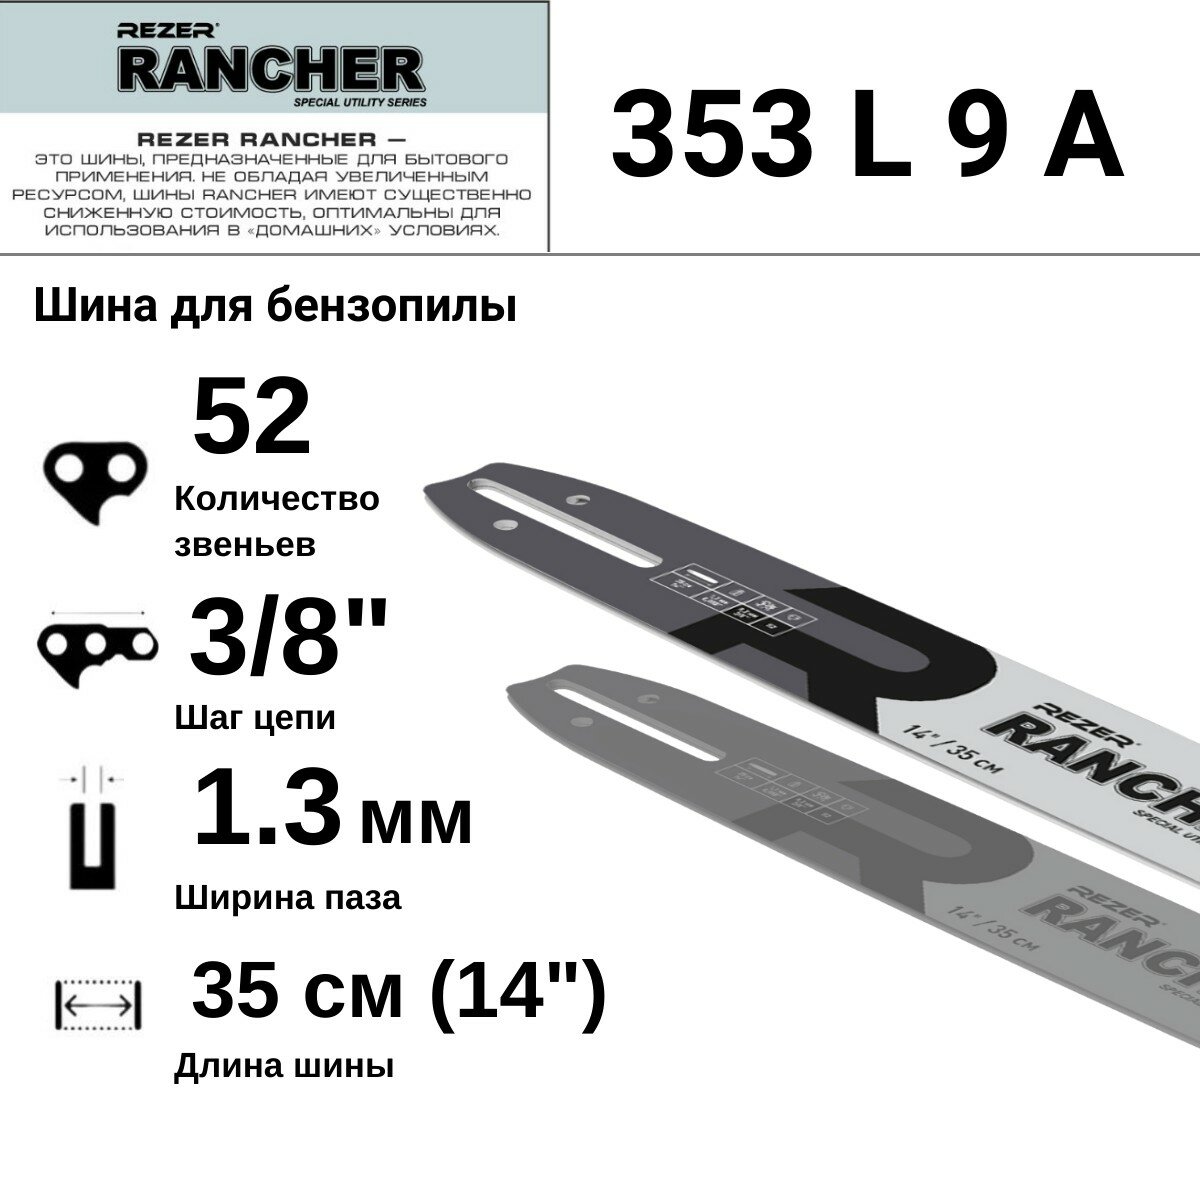 Rezer RANCHER 353 L 9 A Шина для бензопилы Husqvarna 236/240 Partner Poulan Makita 52 звена длина шины 14"( 35 см)  шаг 3/8" ширина паза 1.3 мм